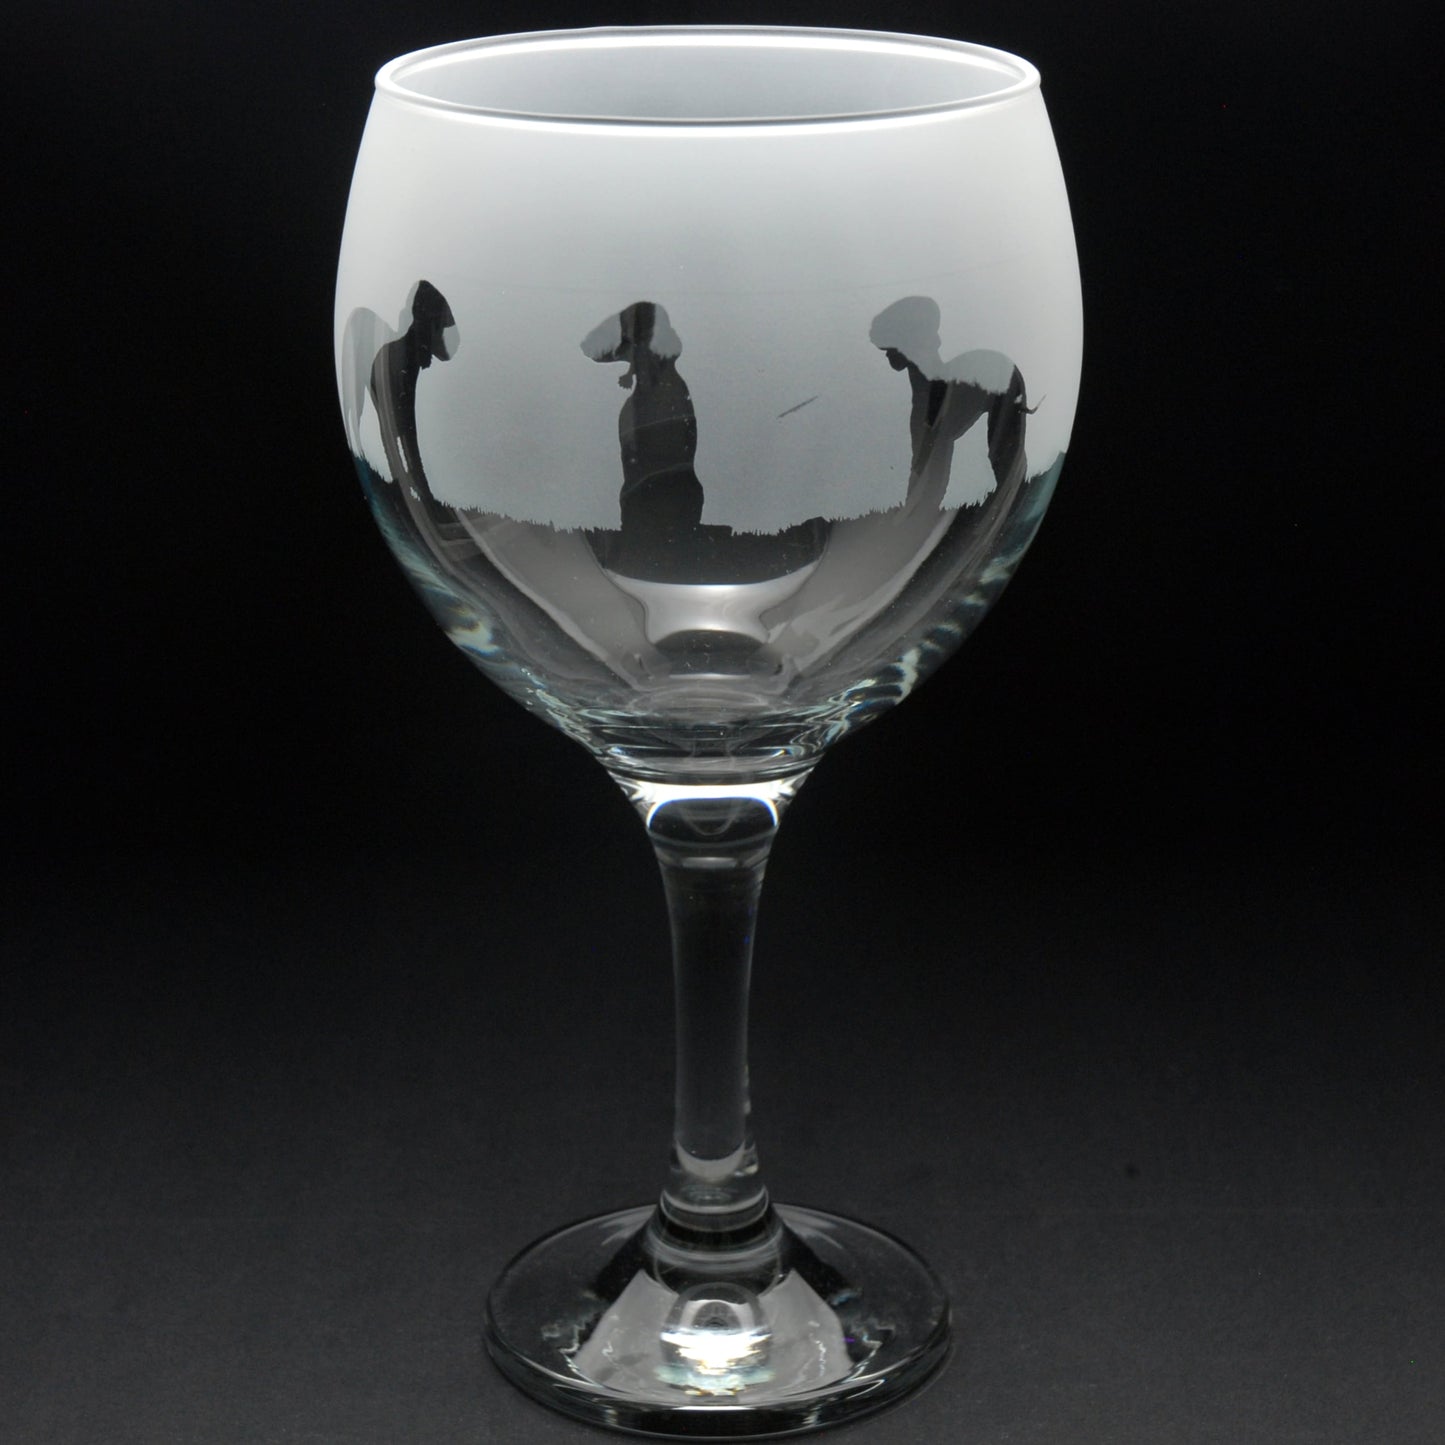 Bedlington Terrier Dog Gin Cocktail Glass - Hand Etched/Engraved Gift